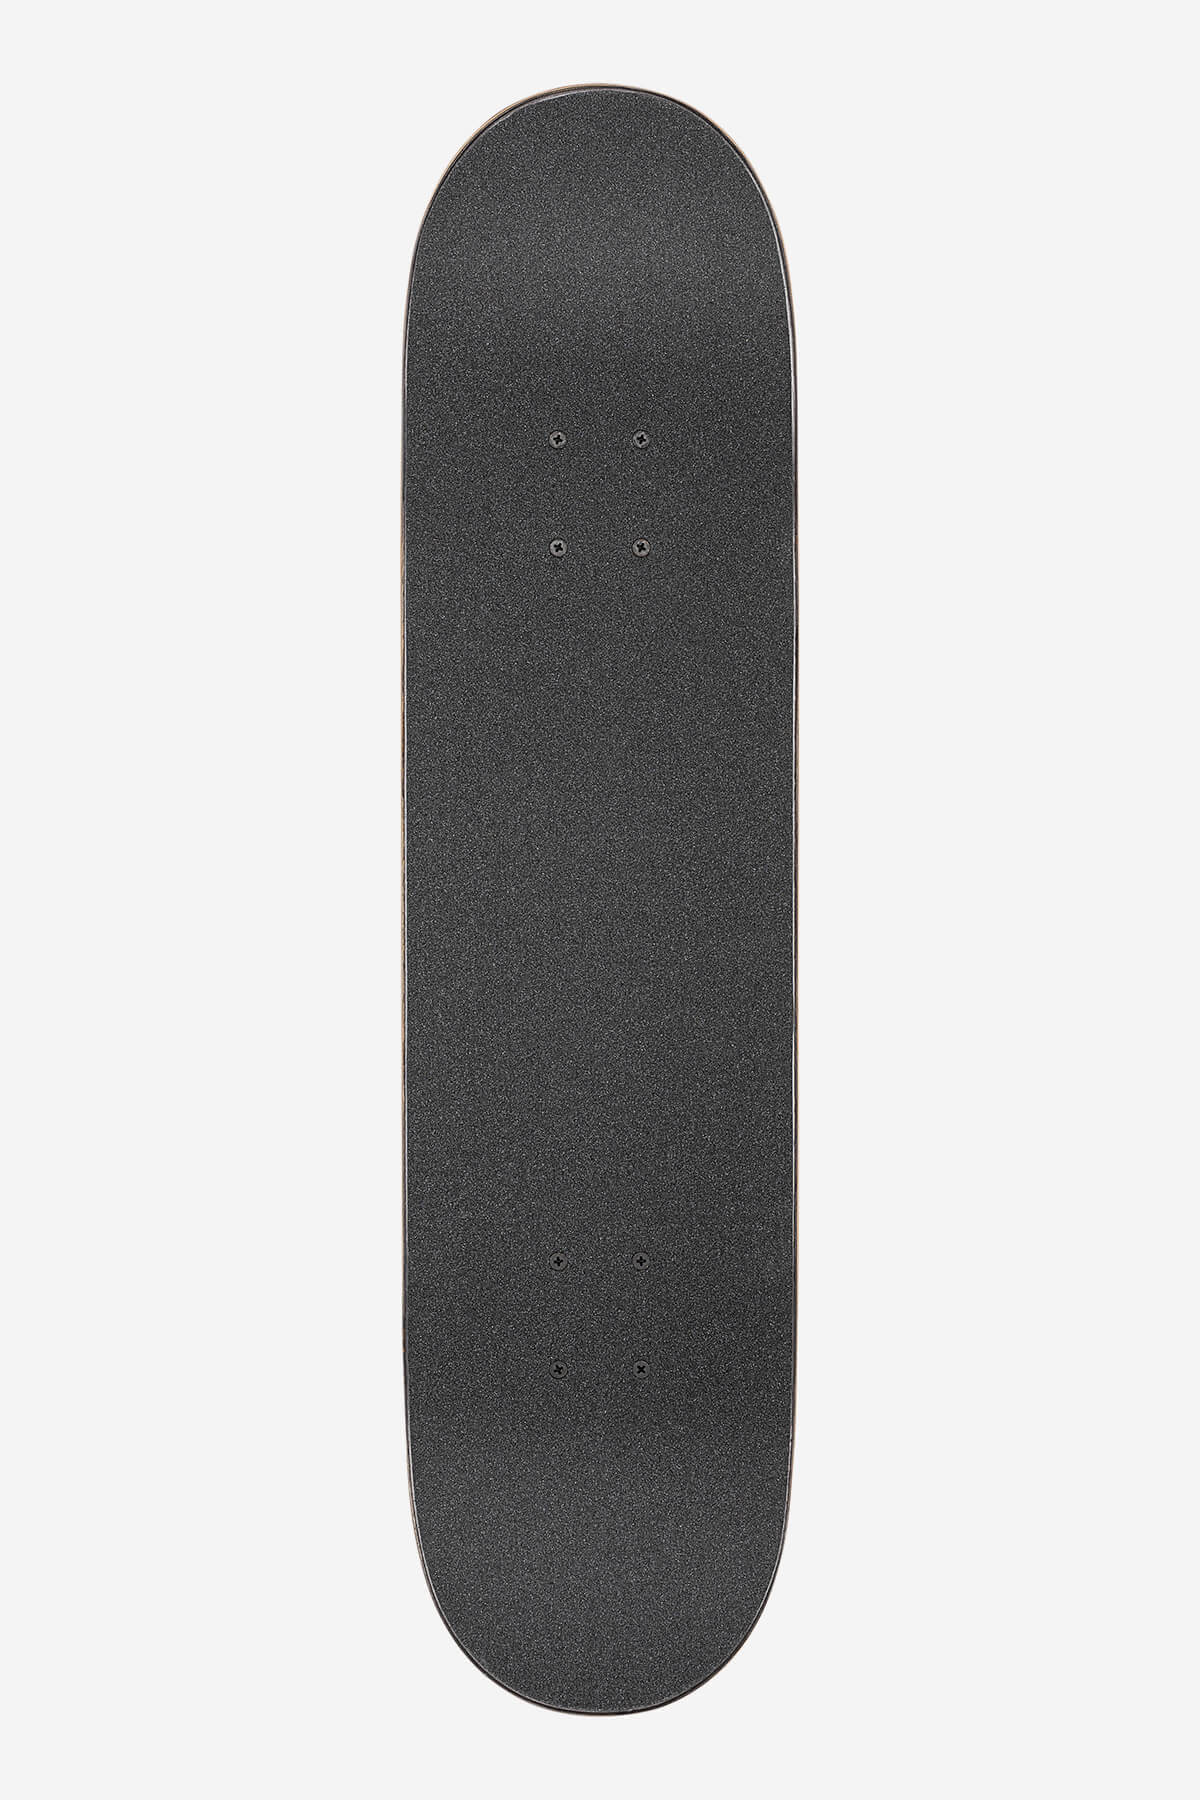 Globe - G1 Ablaze - Tie Dye - 7,75" Completo Skateboard